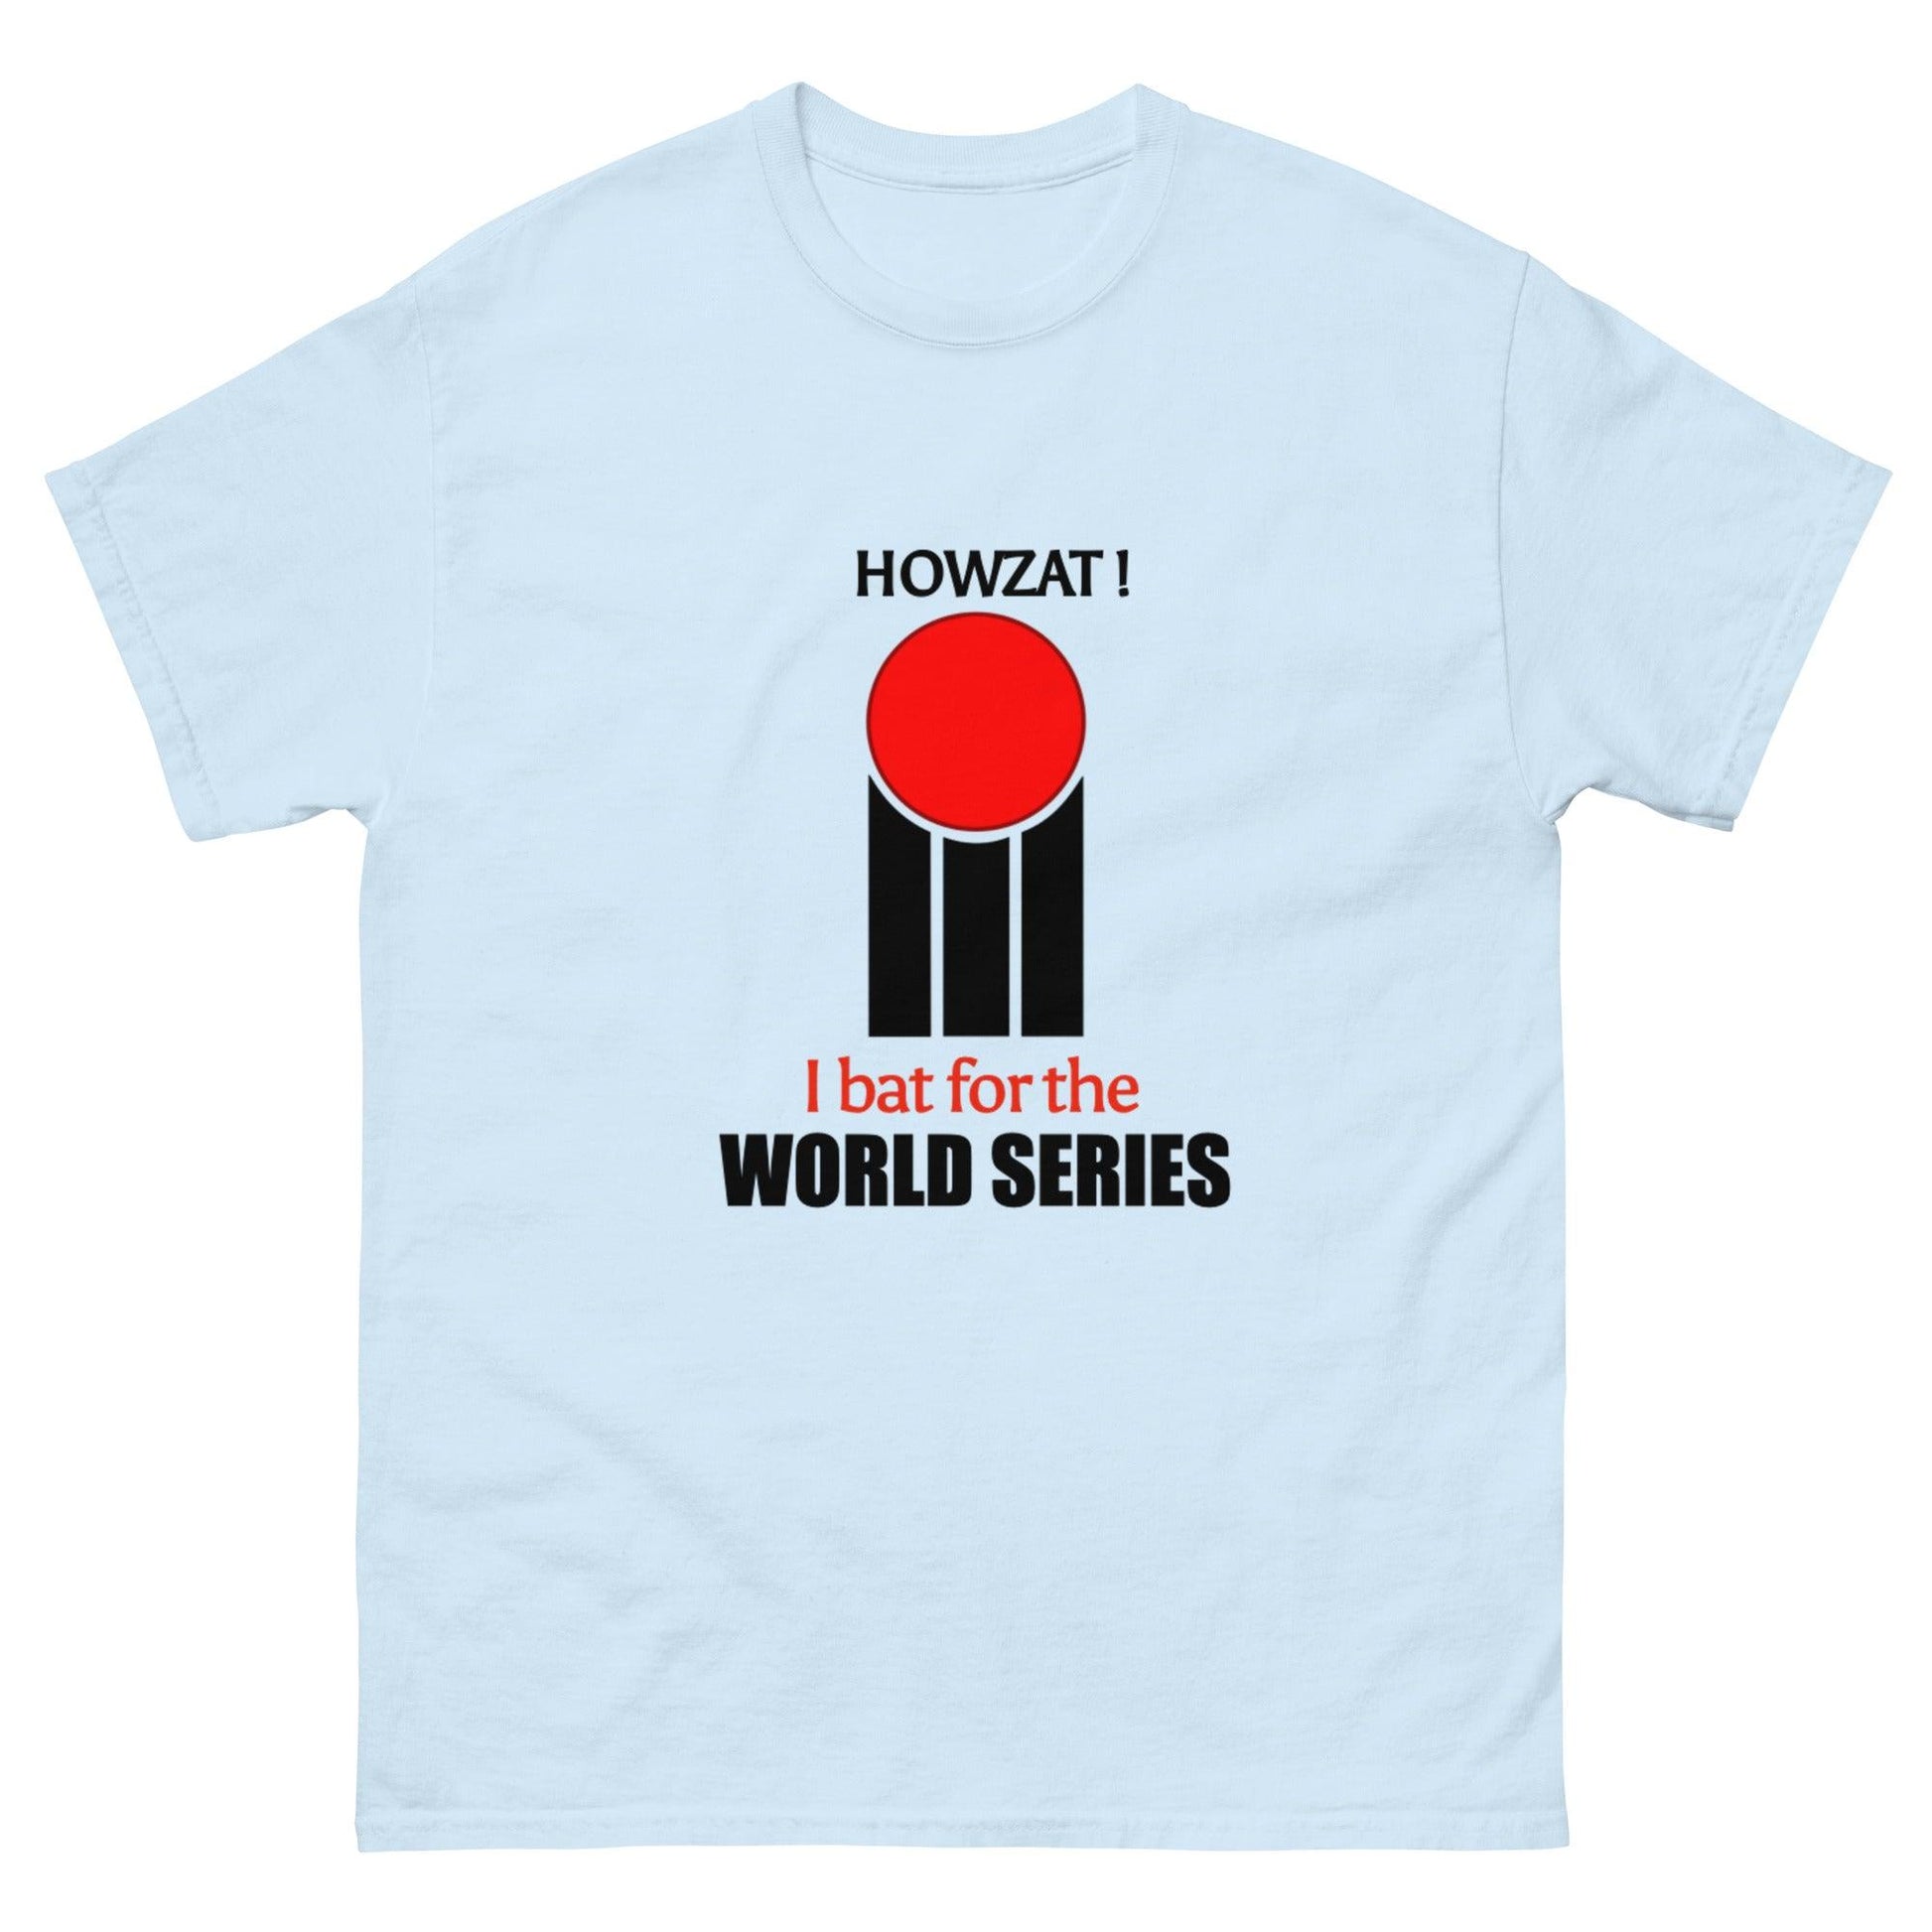 World Series Cricket retro t-shirt by Game Yarns